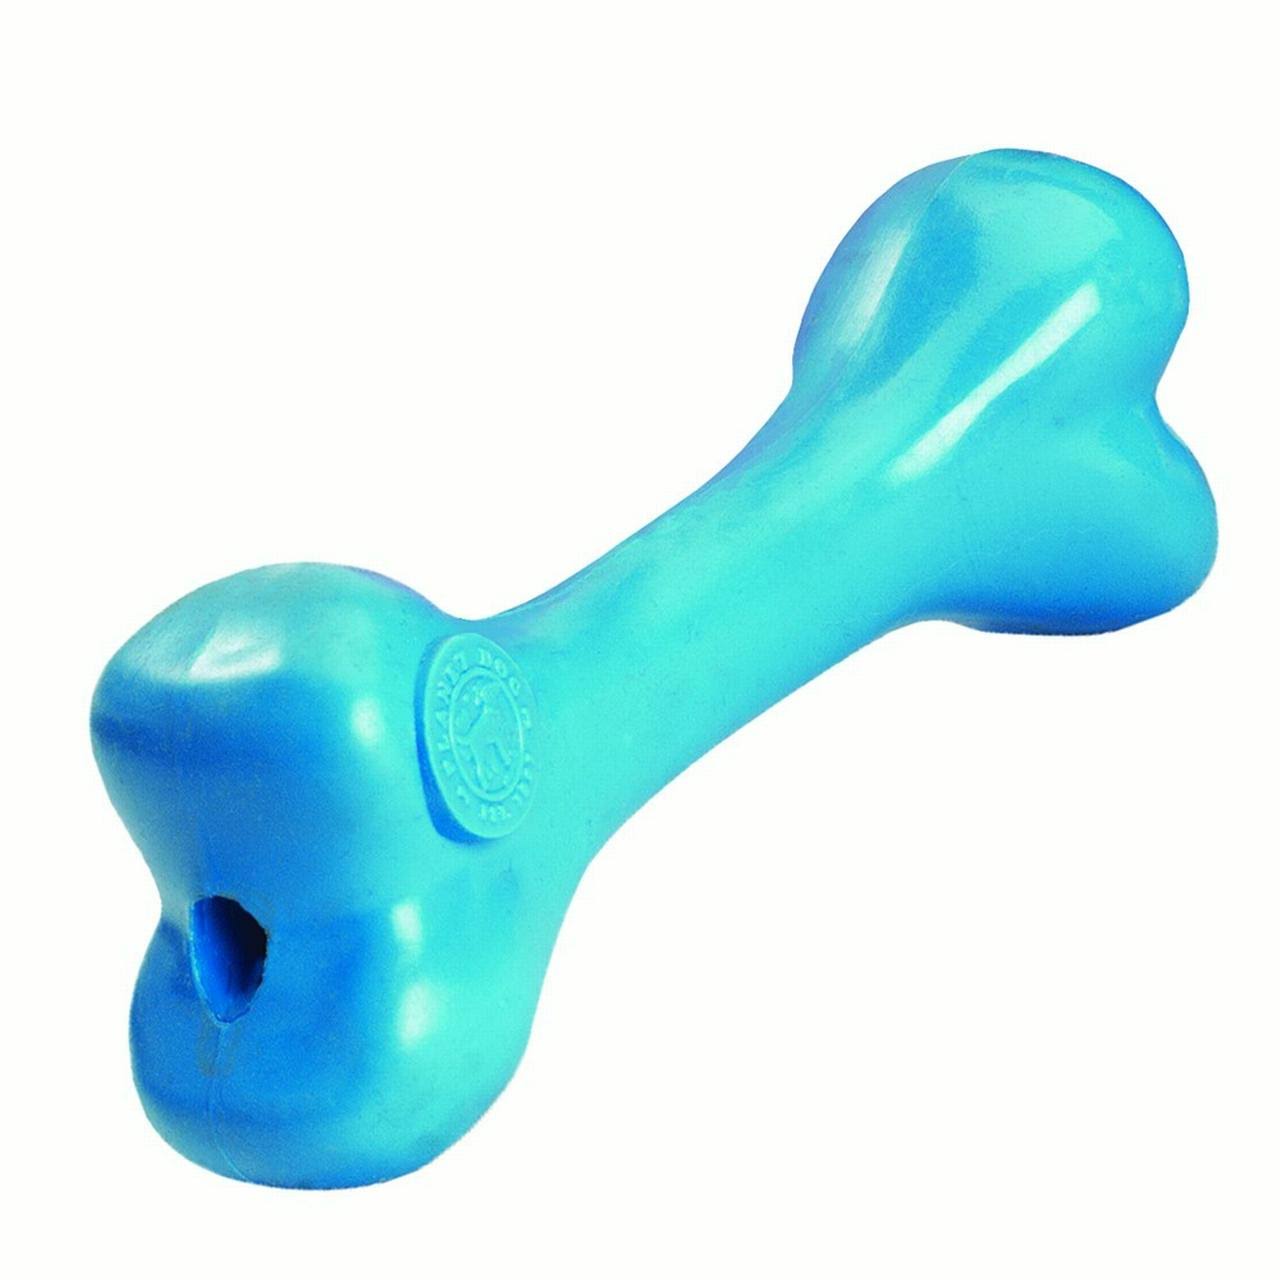 Planet Dog Orbee-Tuff Orbee Bone - Blue, Small